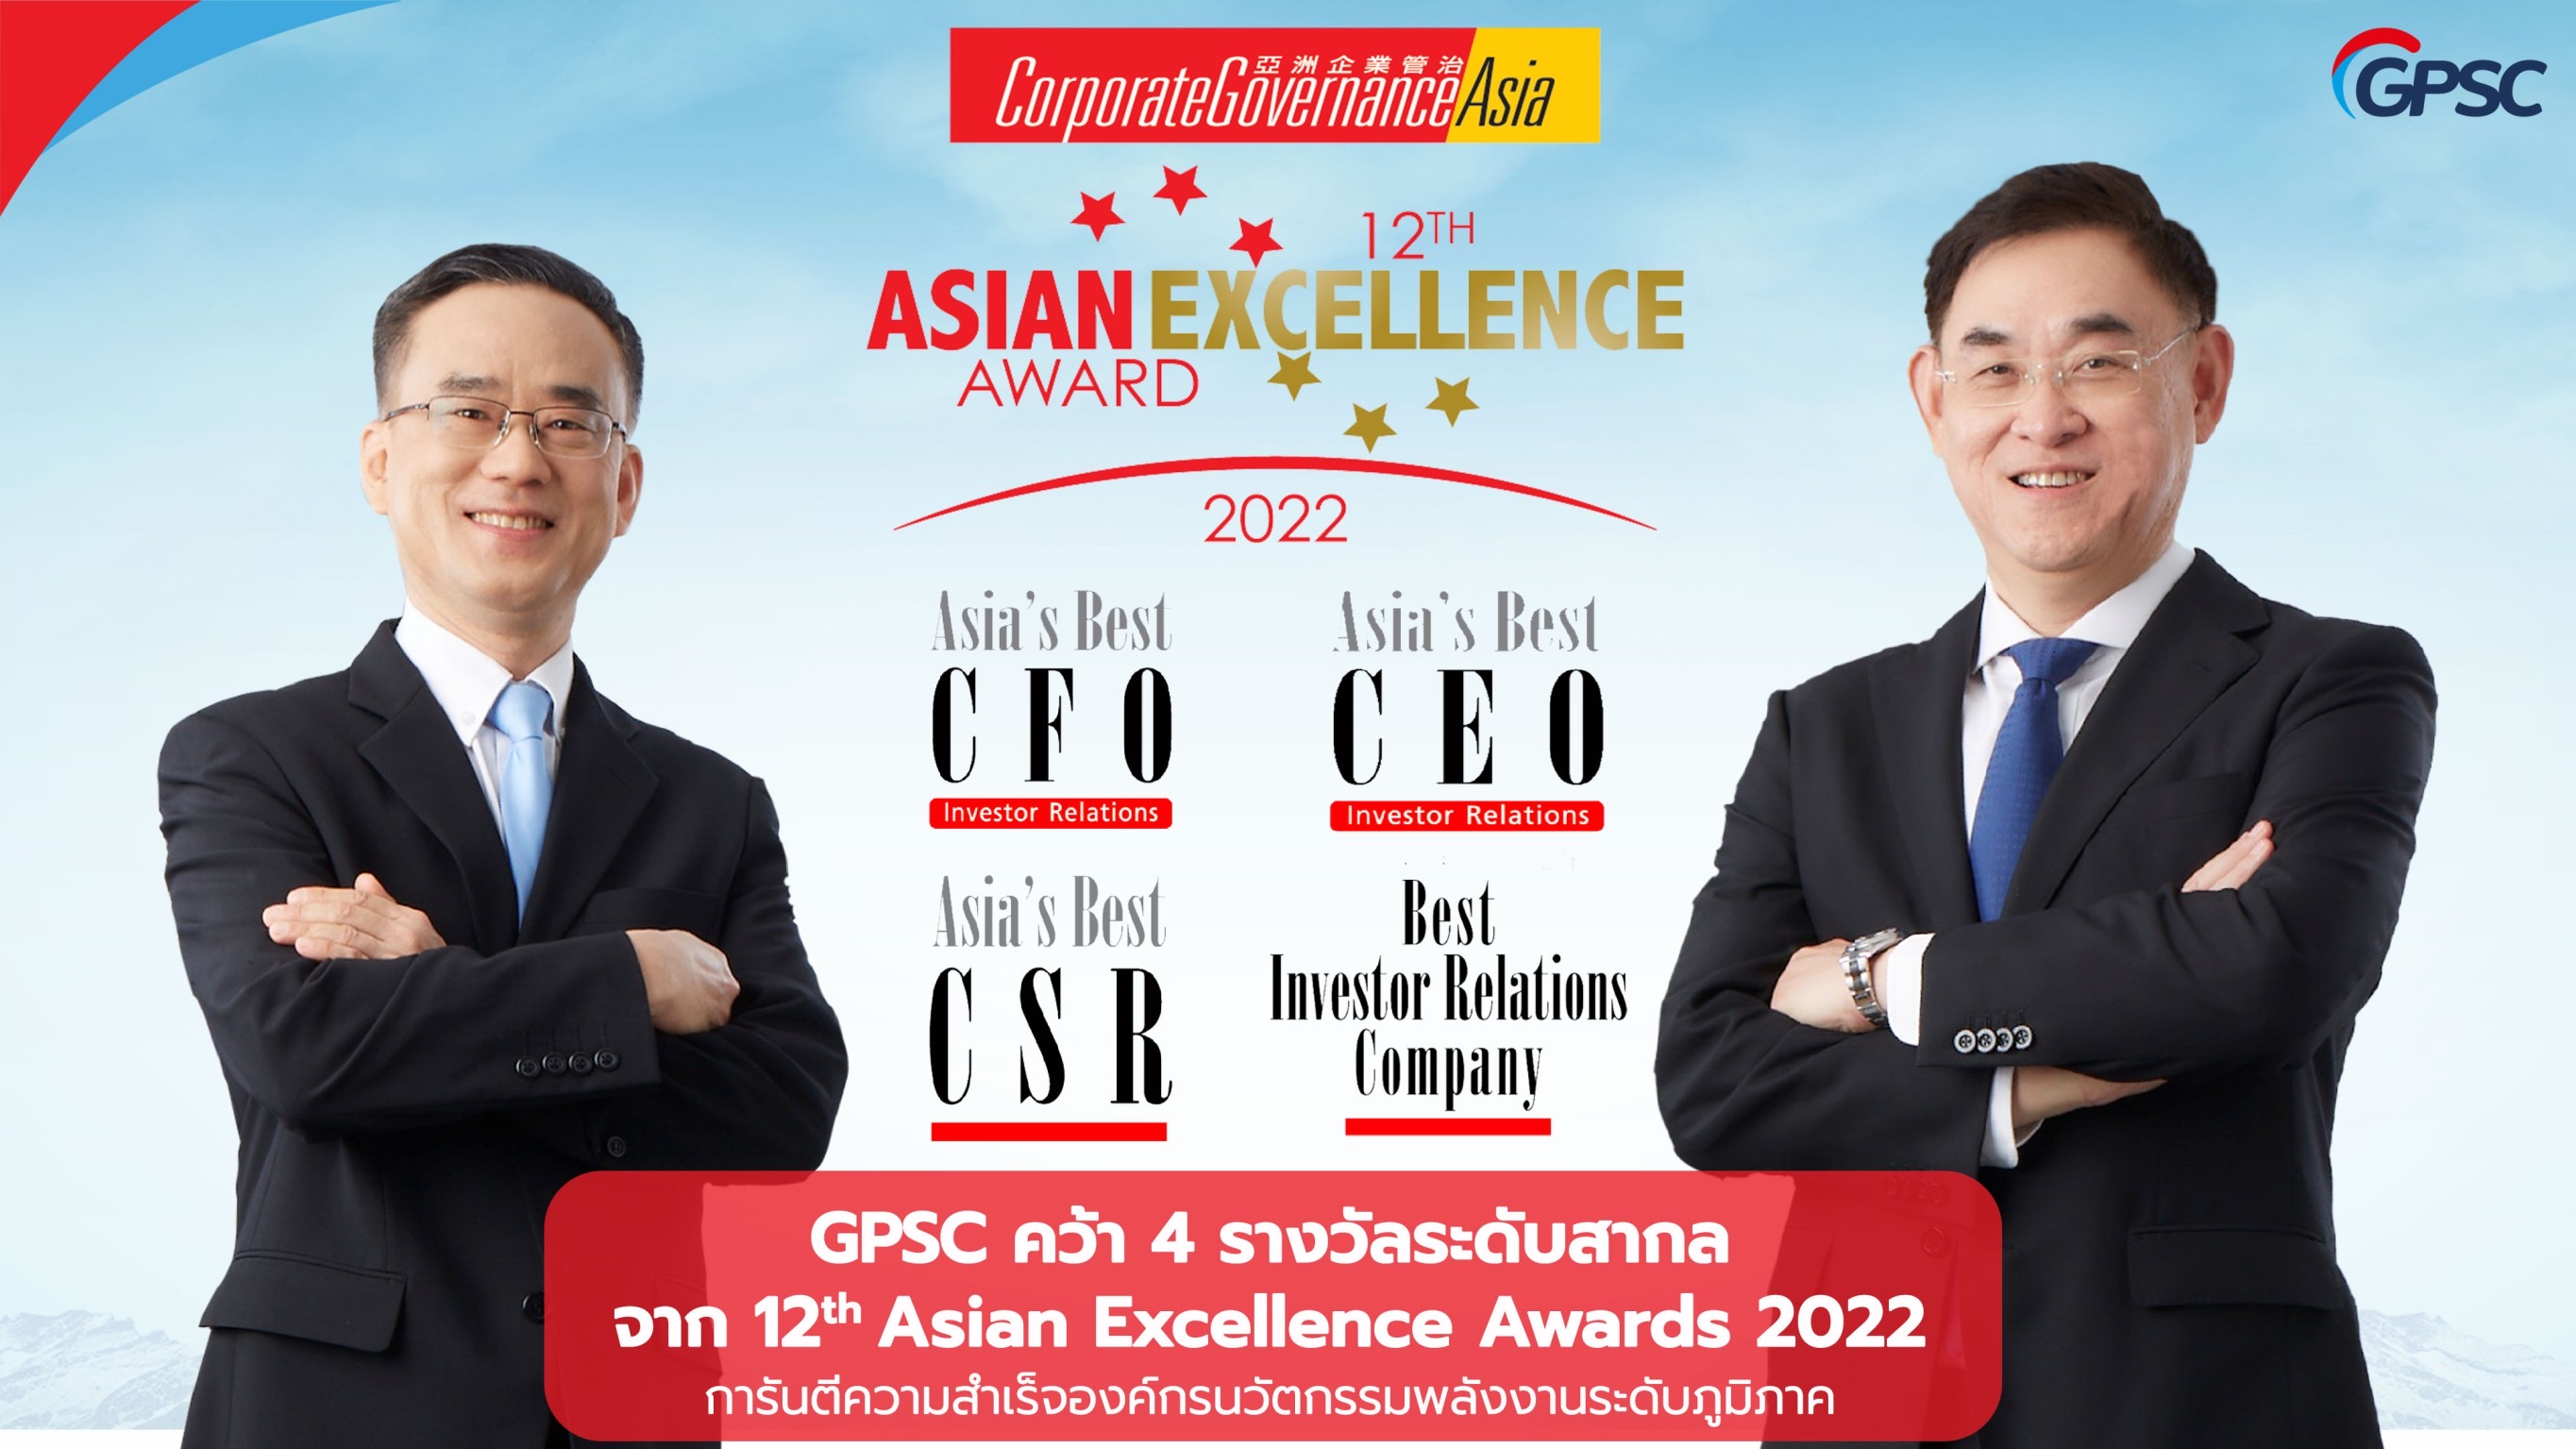 GPSC คว้า 4 รางวัล Asian Excellence Awards 2022 การันตีความสำเร็จองค์กรนวัตกรรมพลังงานระดับภูมิภาค